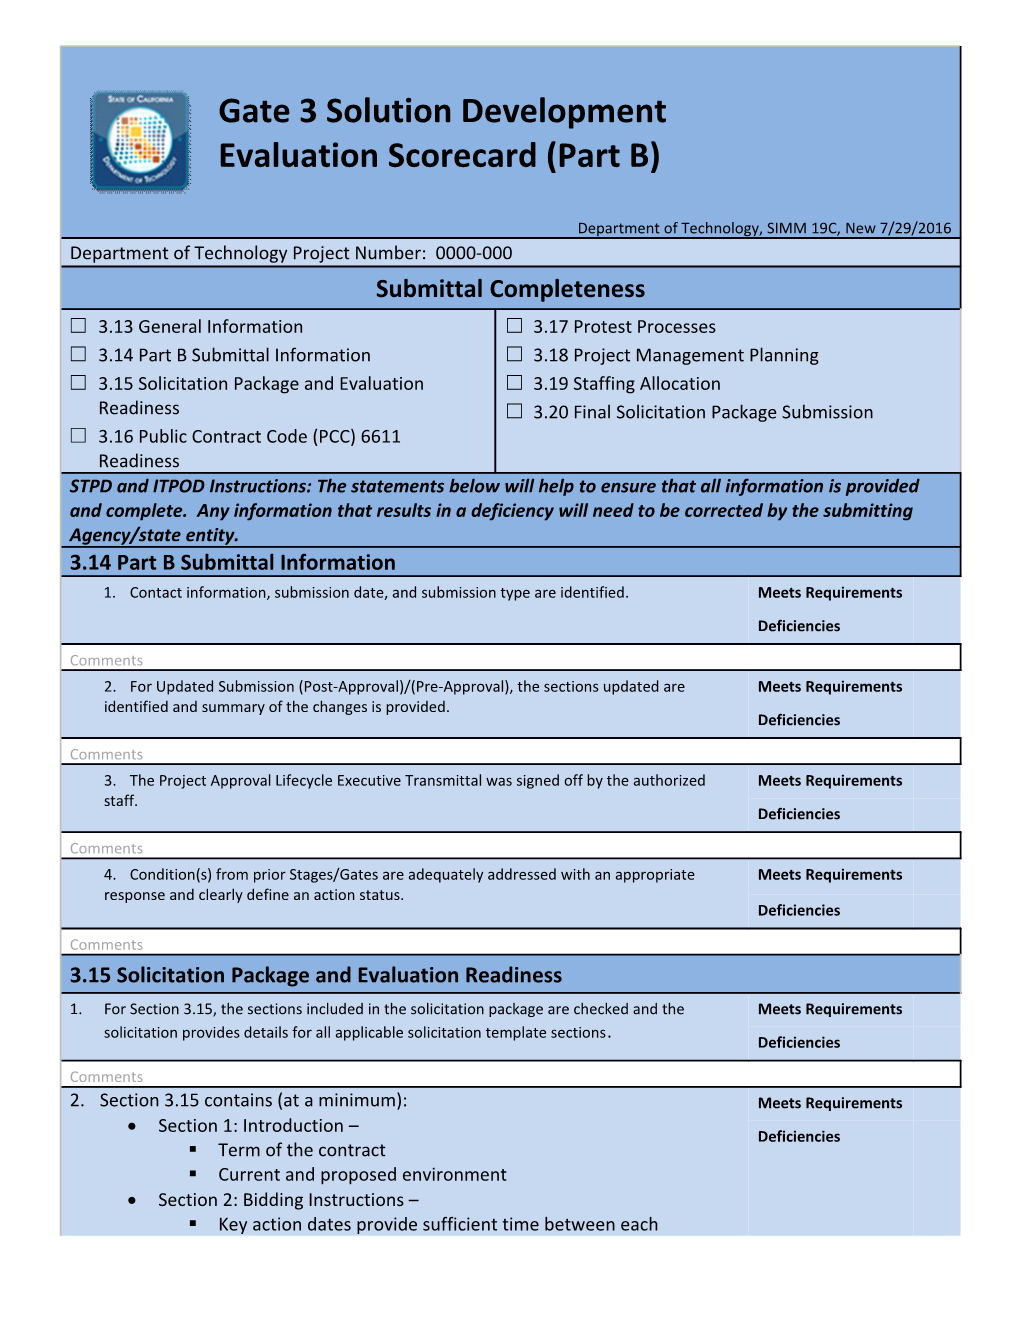 C.8 Stage 3 Evaluation Scorecard Part B